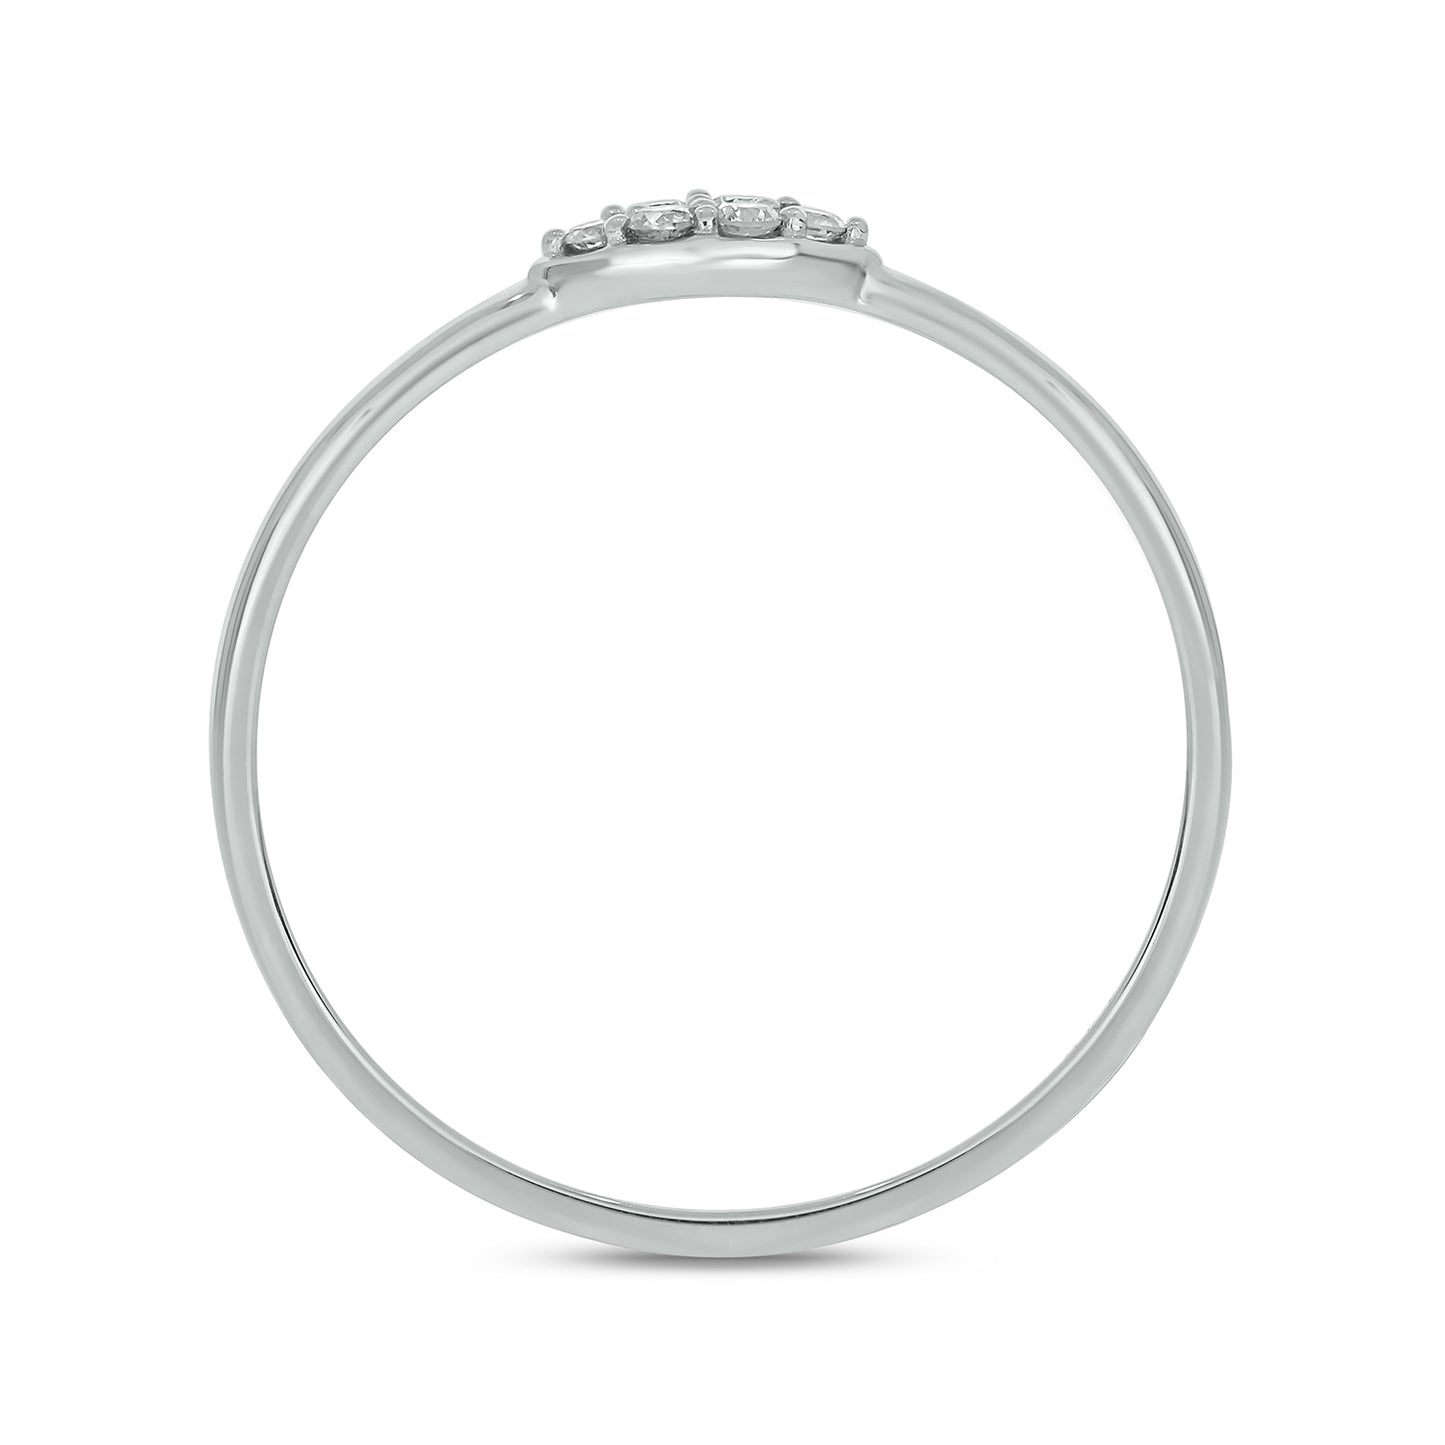 14KT Gold Oval Shaped Diamond Studded Dainty Ring